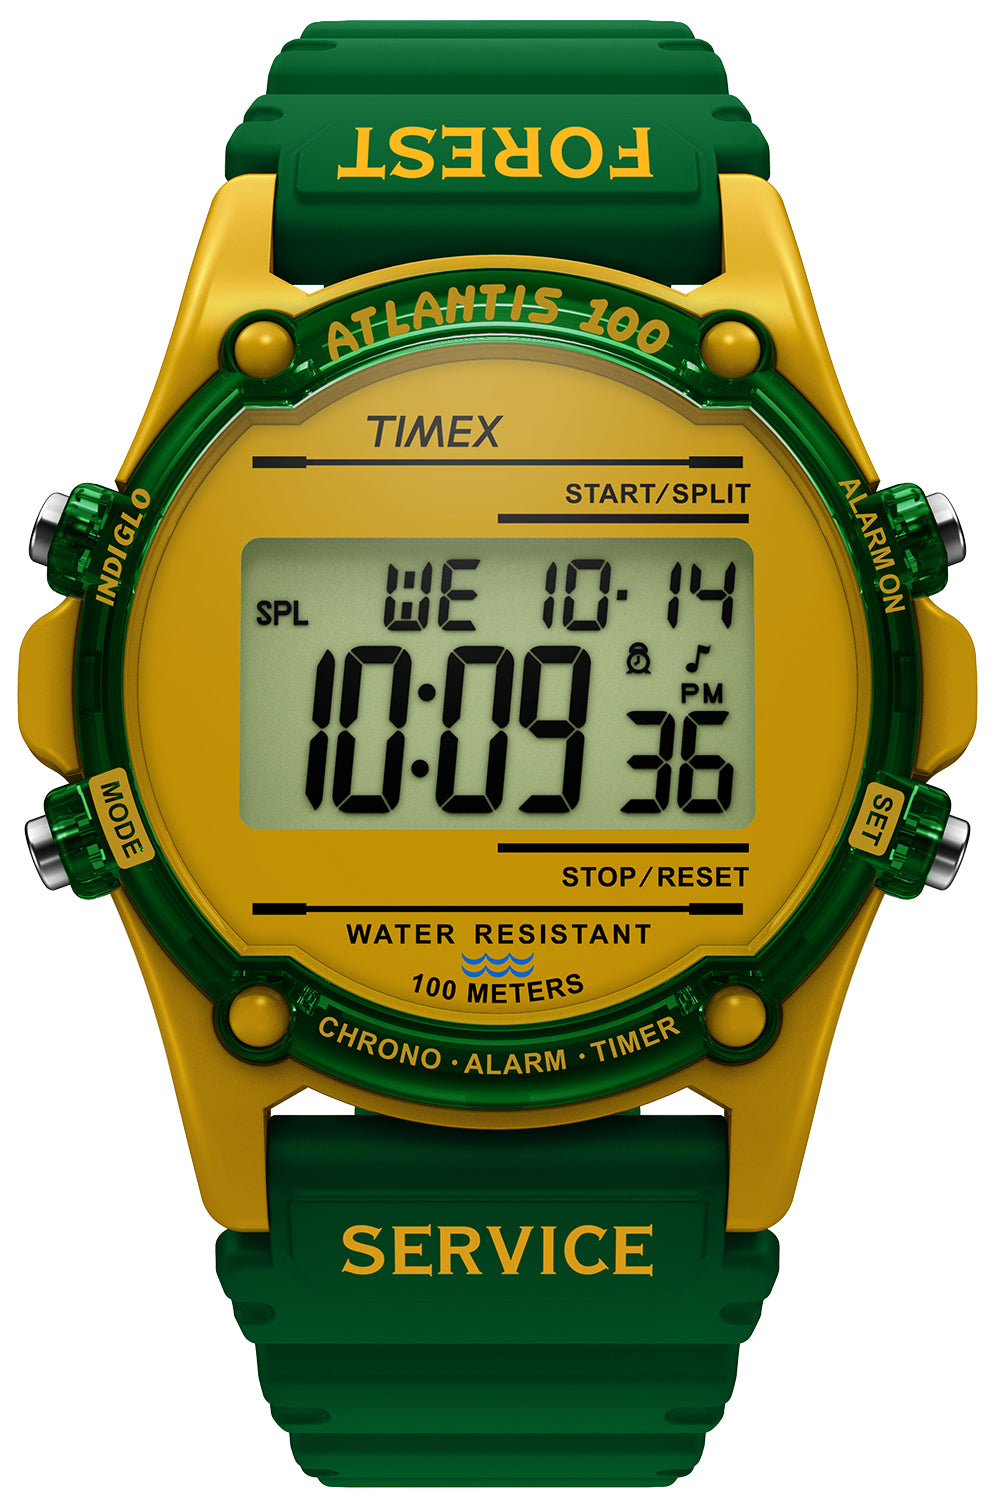 Atlantis 100 Forest Service